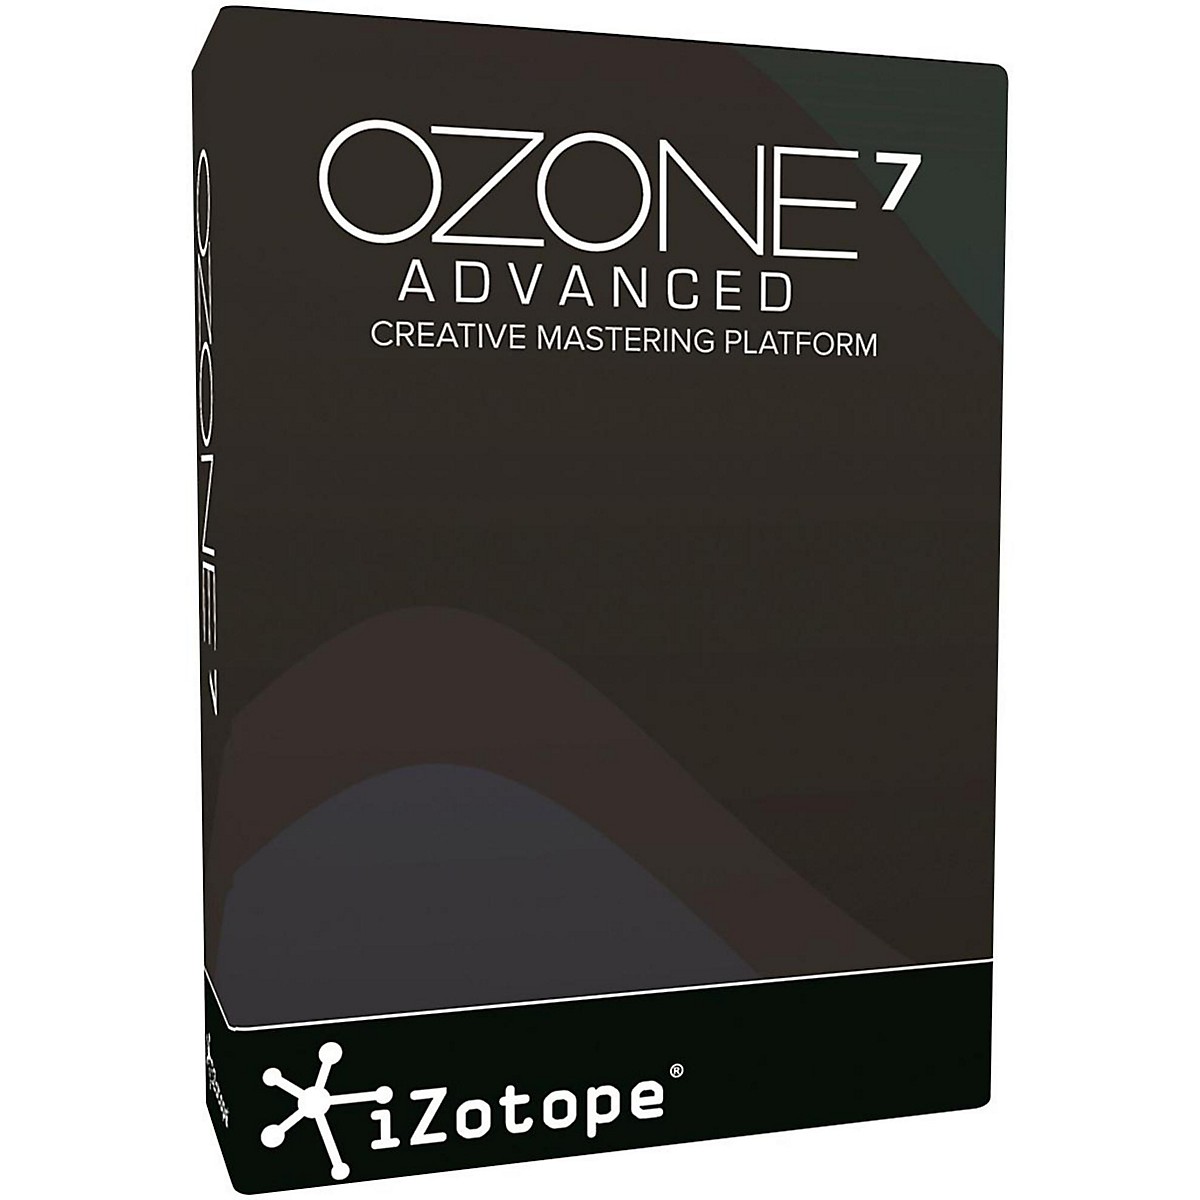 Izotope 7 keygen free download